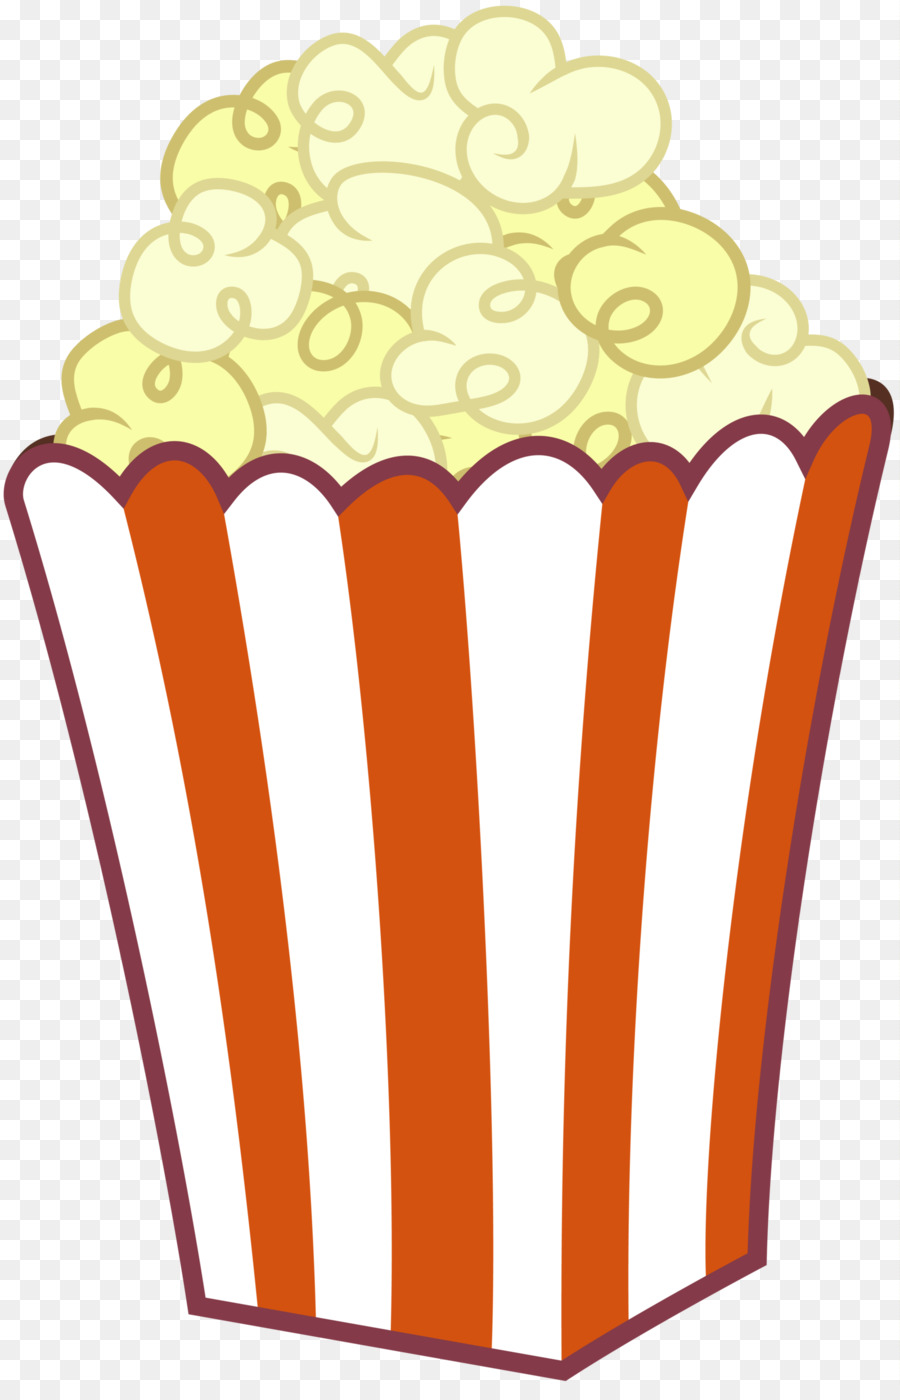 Popcorn Caramel corn Clip art - Popcorn Cartoon png download - 1600*2463 - Free Transparent Popcorn png Download.